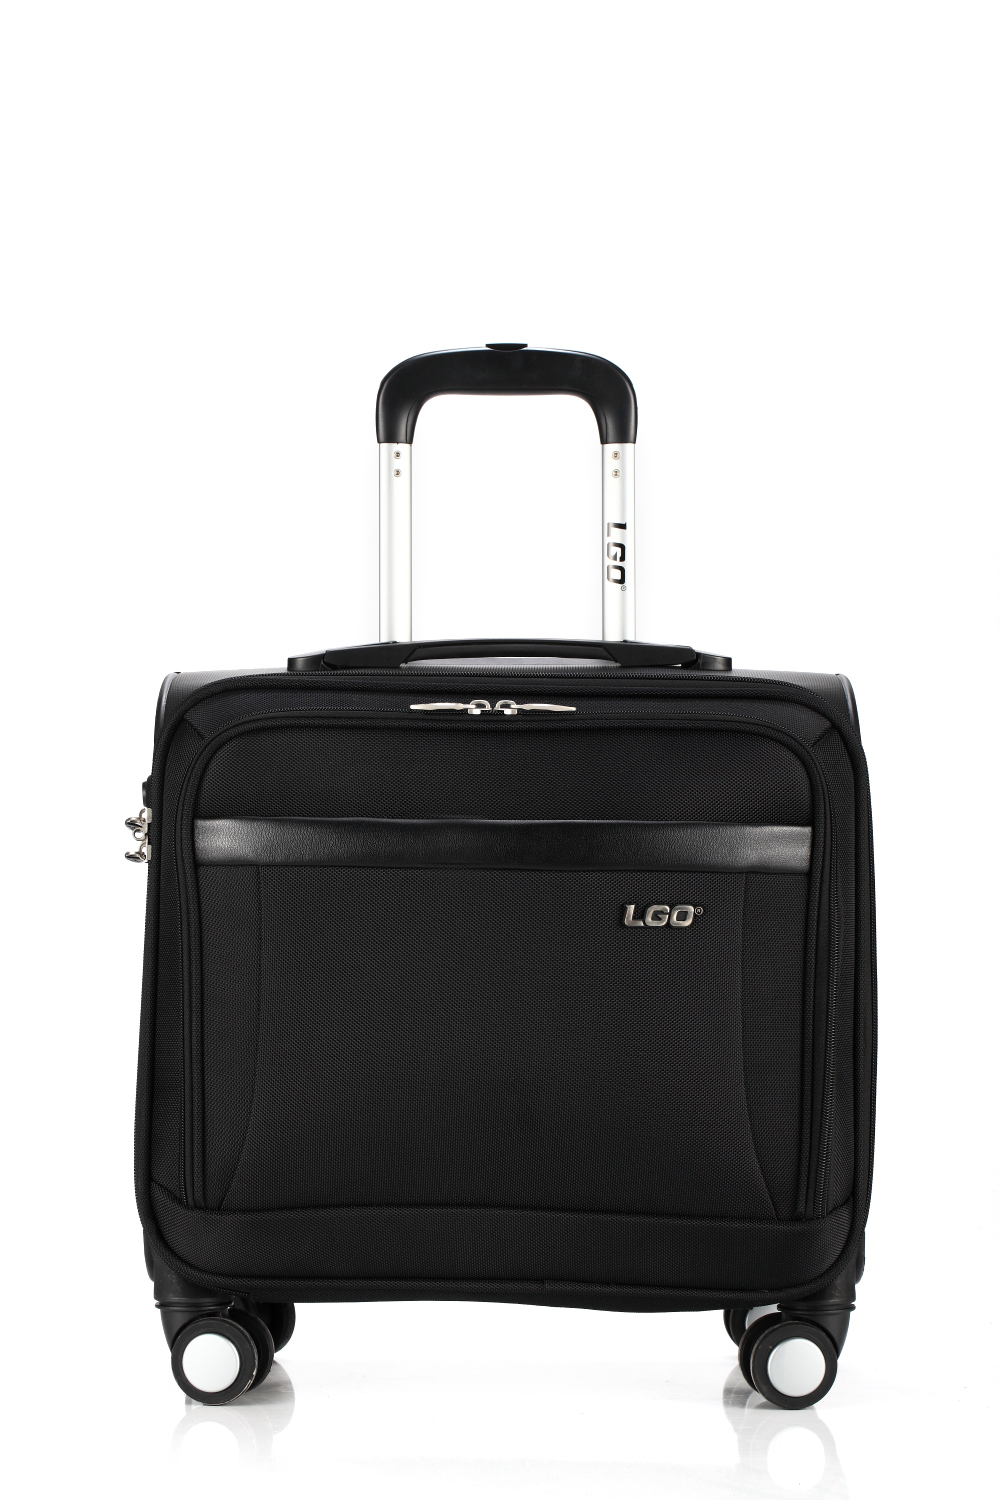 Yanteng stylish laptop  backpack in black color